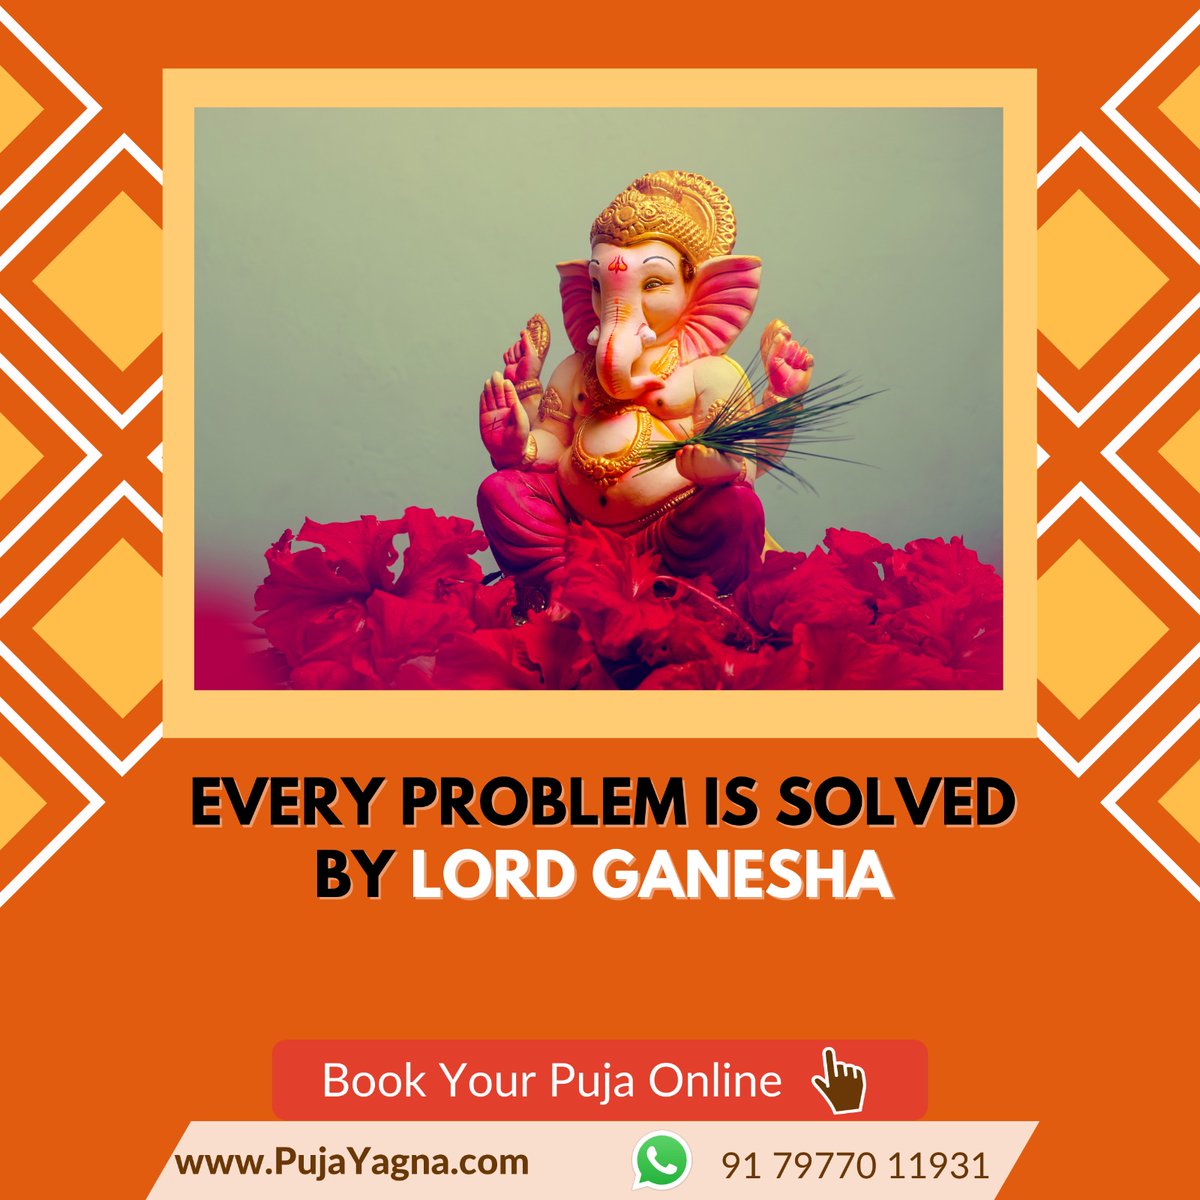 Every problem is solved by Lord Ganesha!

To book it online, visit pujayagna.com/products/shiv-…

#bookforpandit #onlinepoojan #onlinepoojabooking #aarti  #satsang #spiritualgangster  #onlinesatsang #भक्ति #bhajan #kirtan #vedicchanting #vedicmantra #onlineconcert